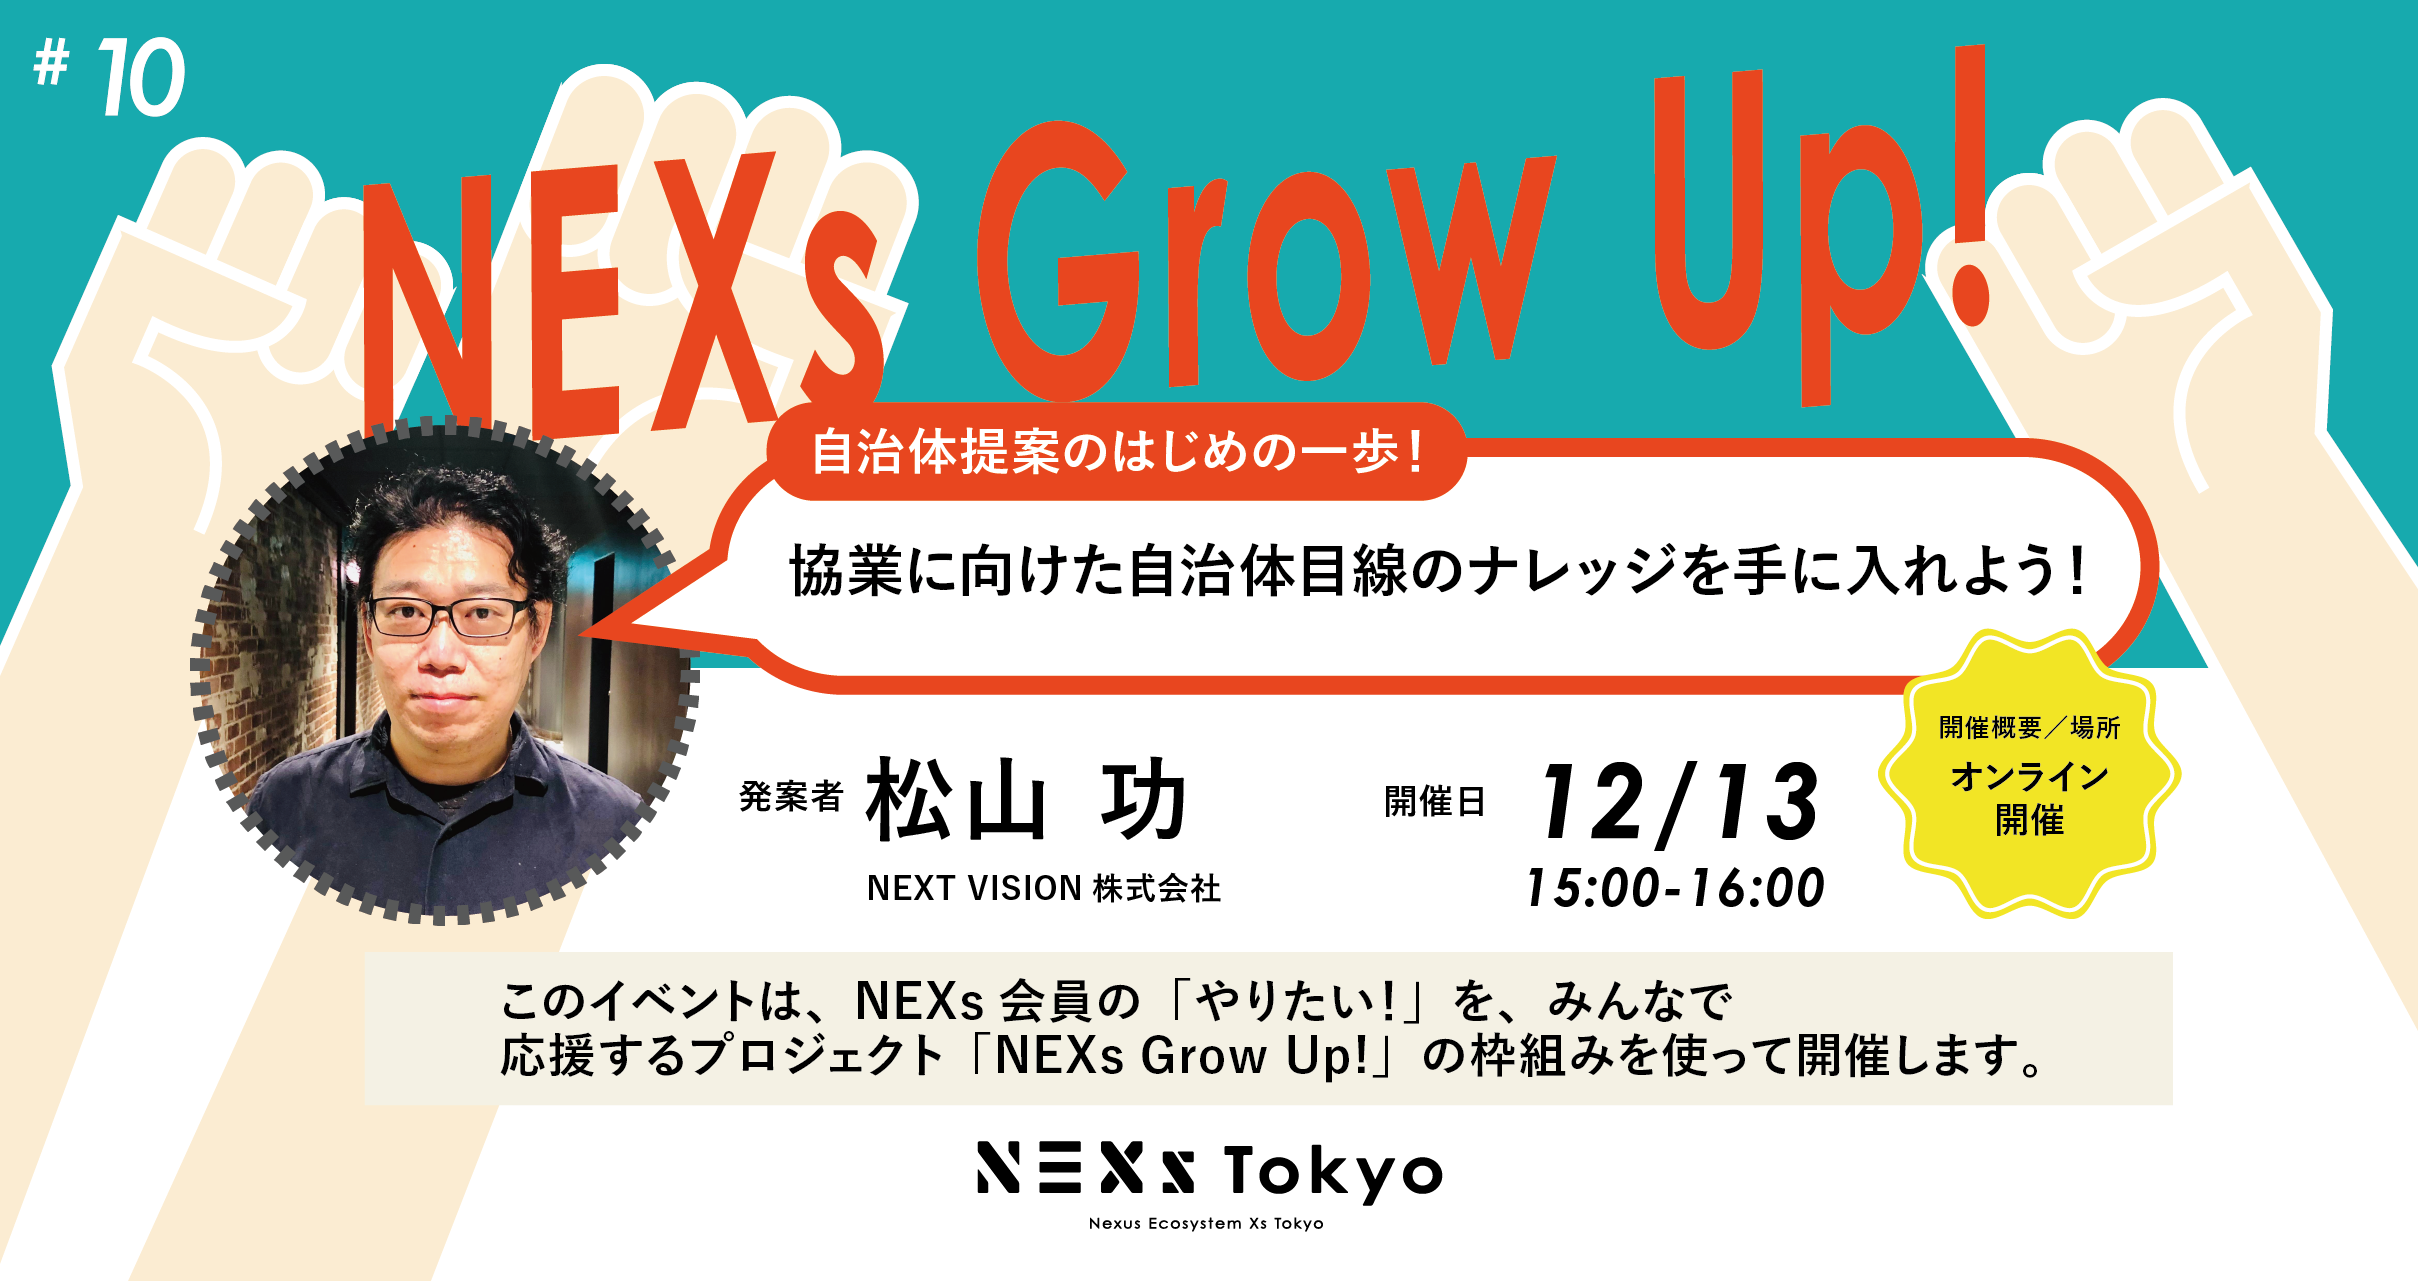 NEXs Grow Up! vol.10 自治体提案のはじめの一歩！協業に向けた自治体目線のナレッジを手に入れよう！